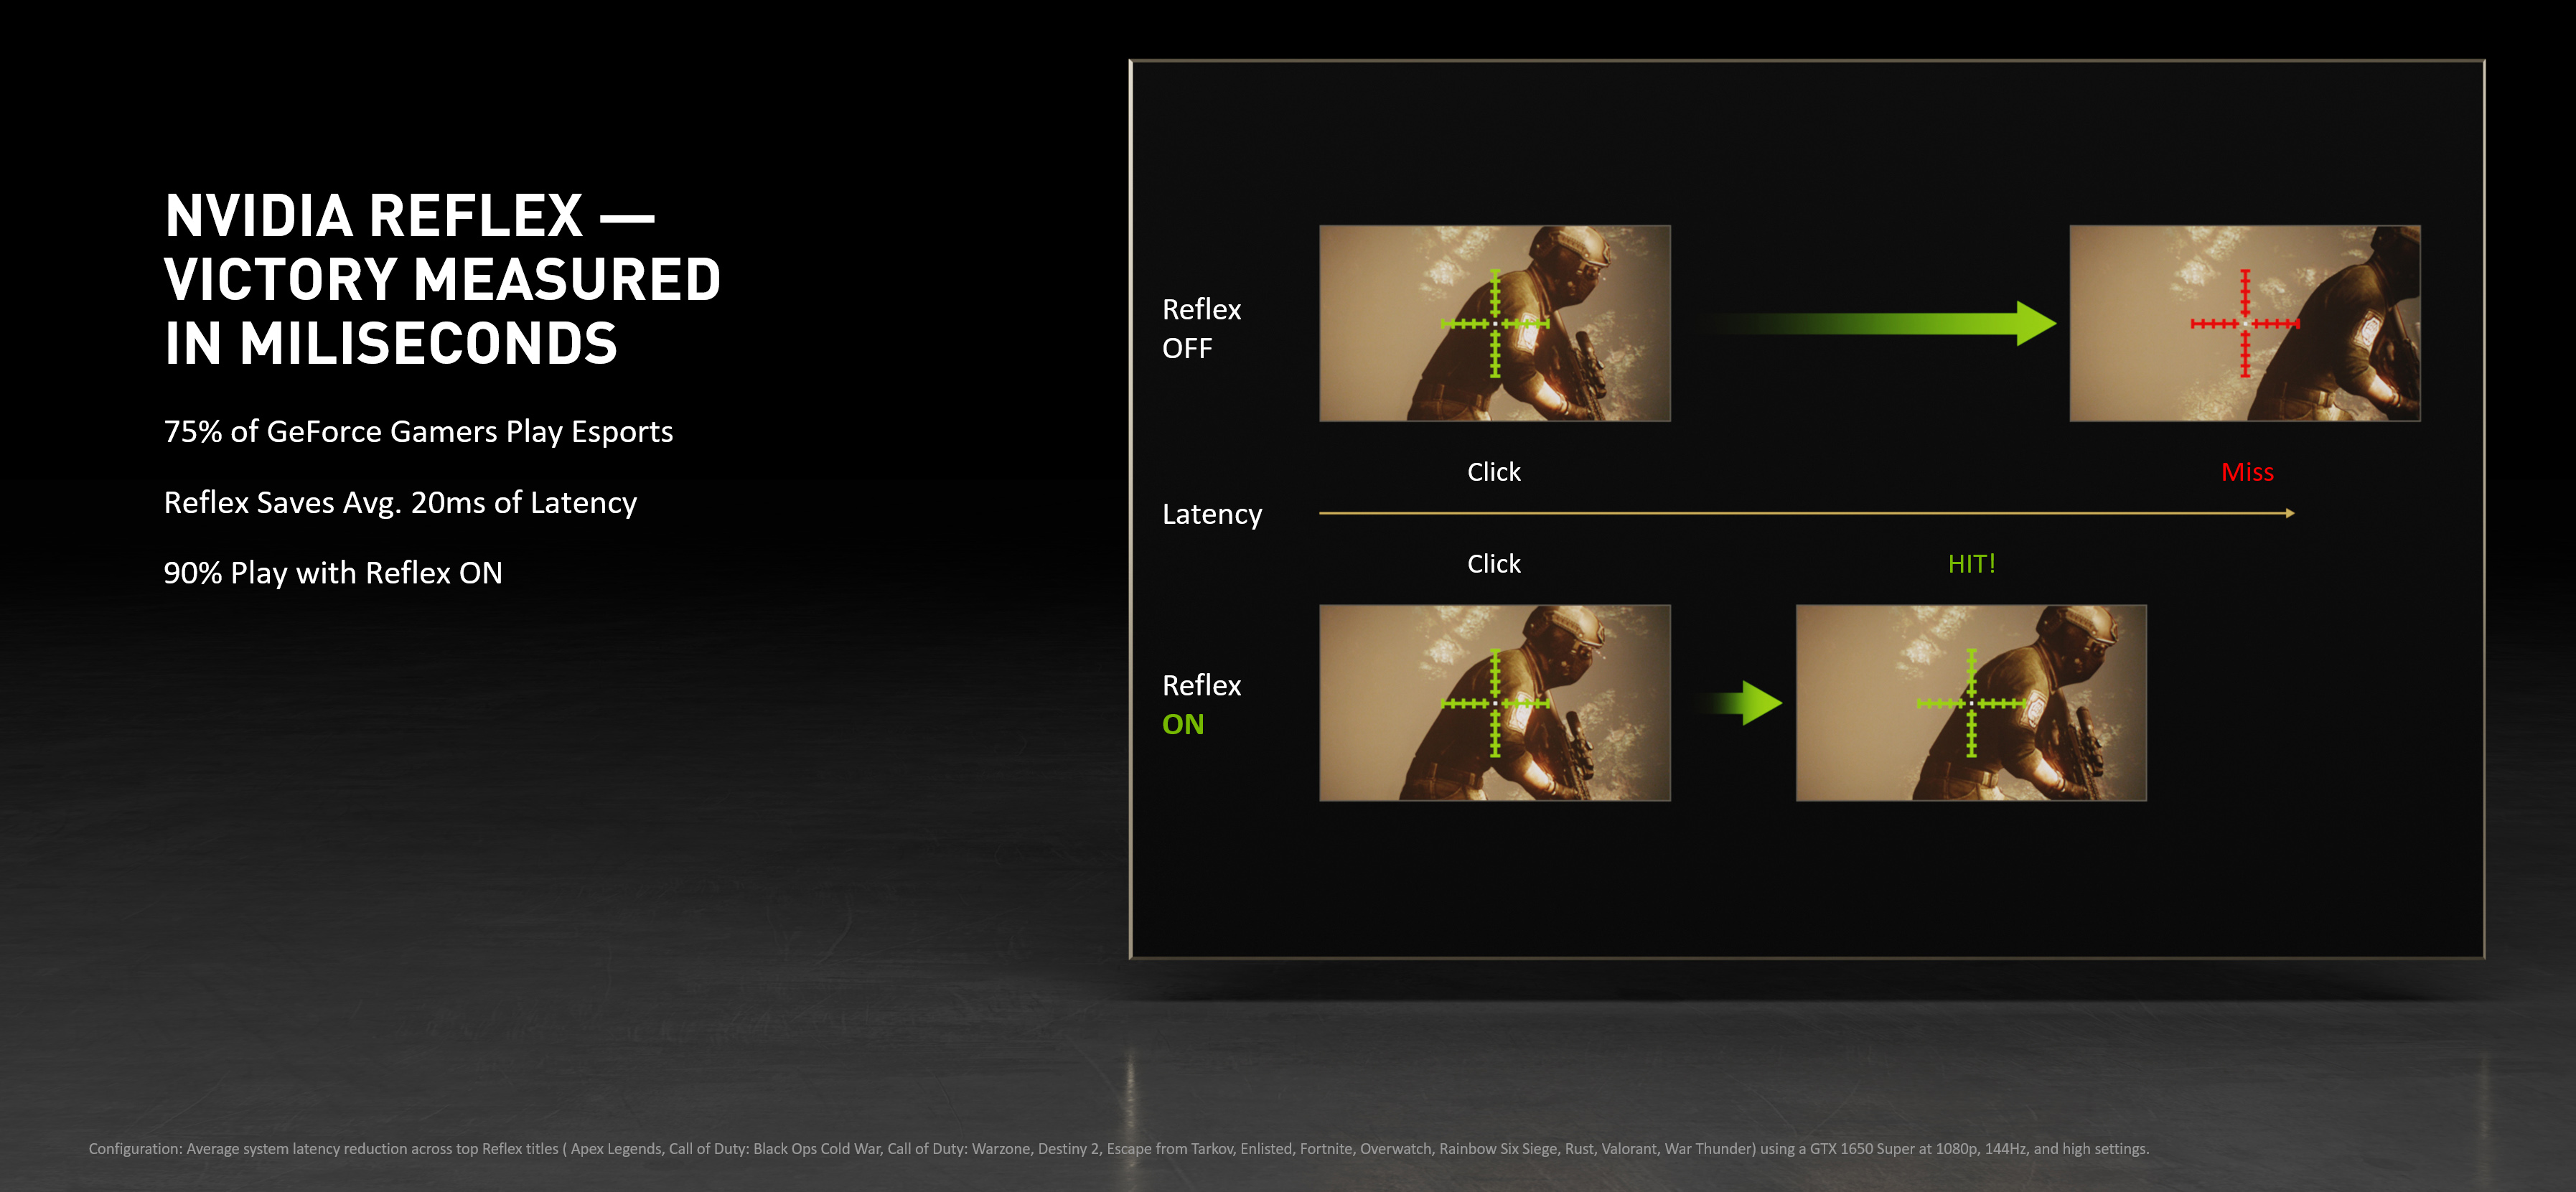 Nvidia reflex dota 2 включать или нет фото 28